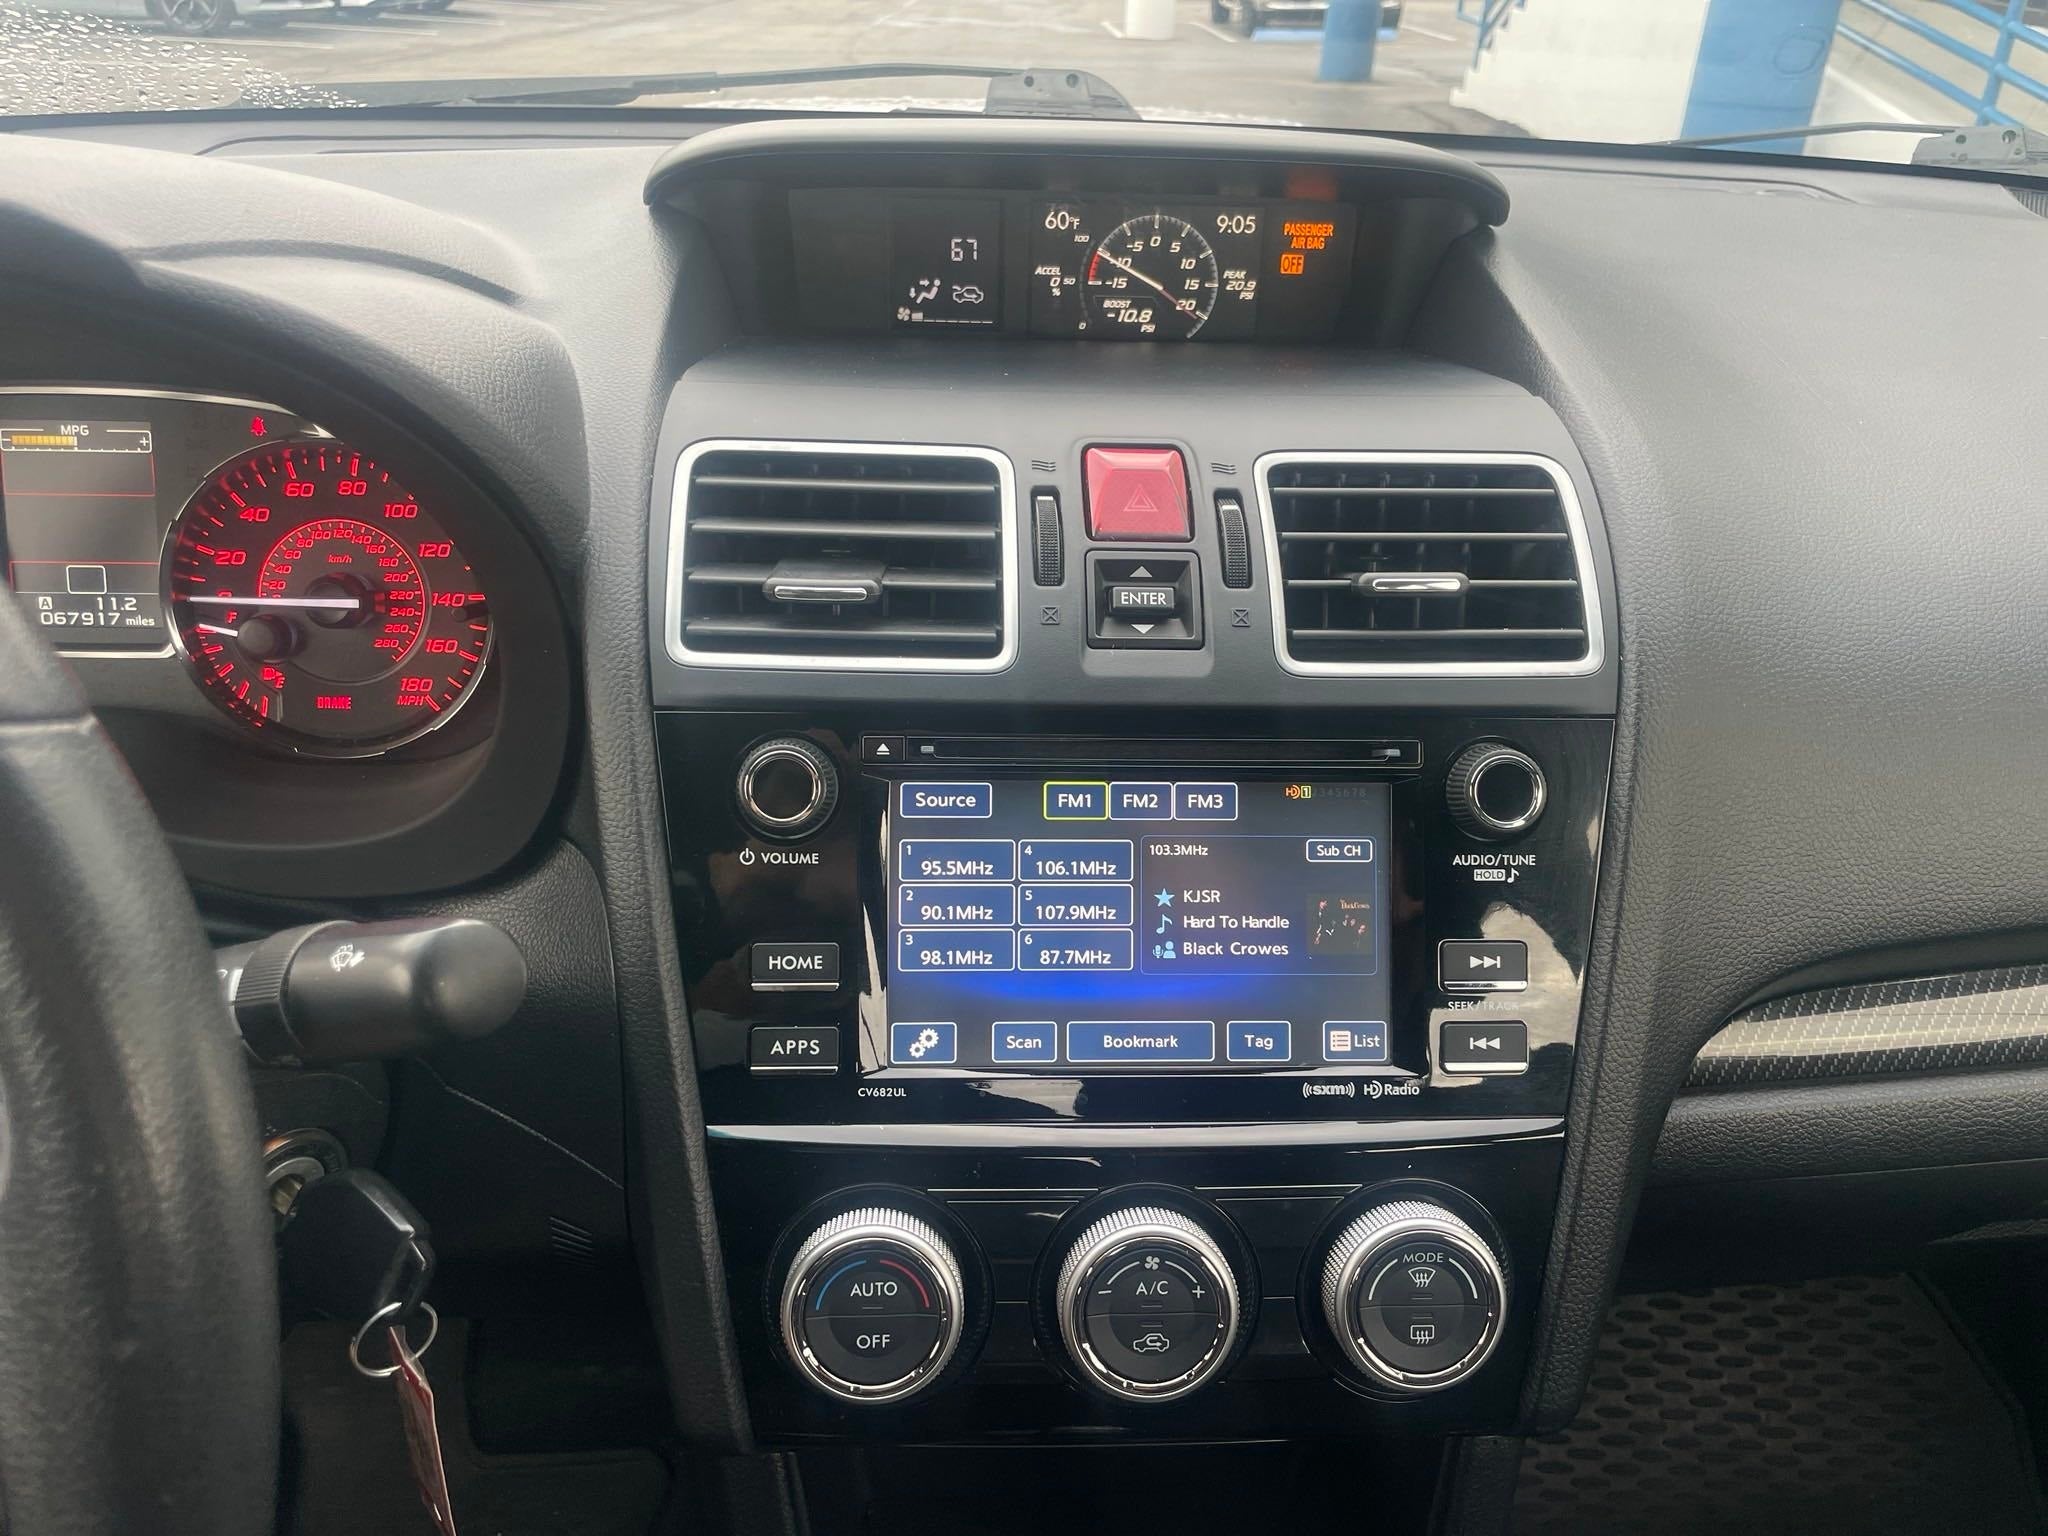 2017 Subaru WRX Base